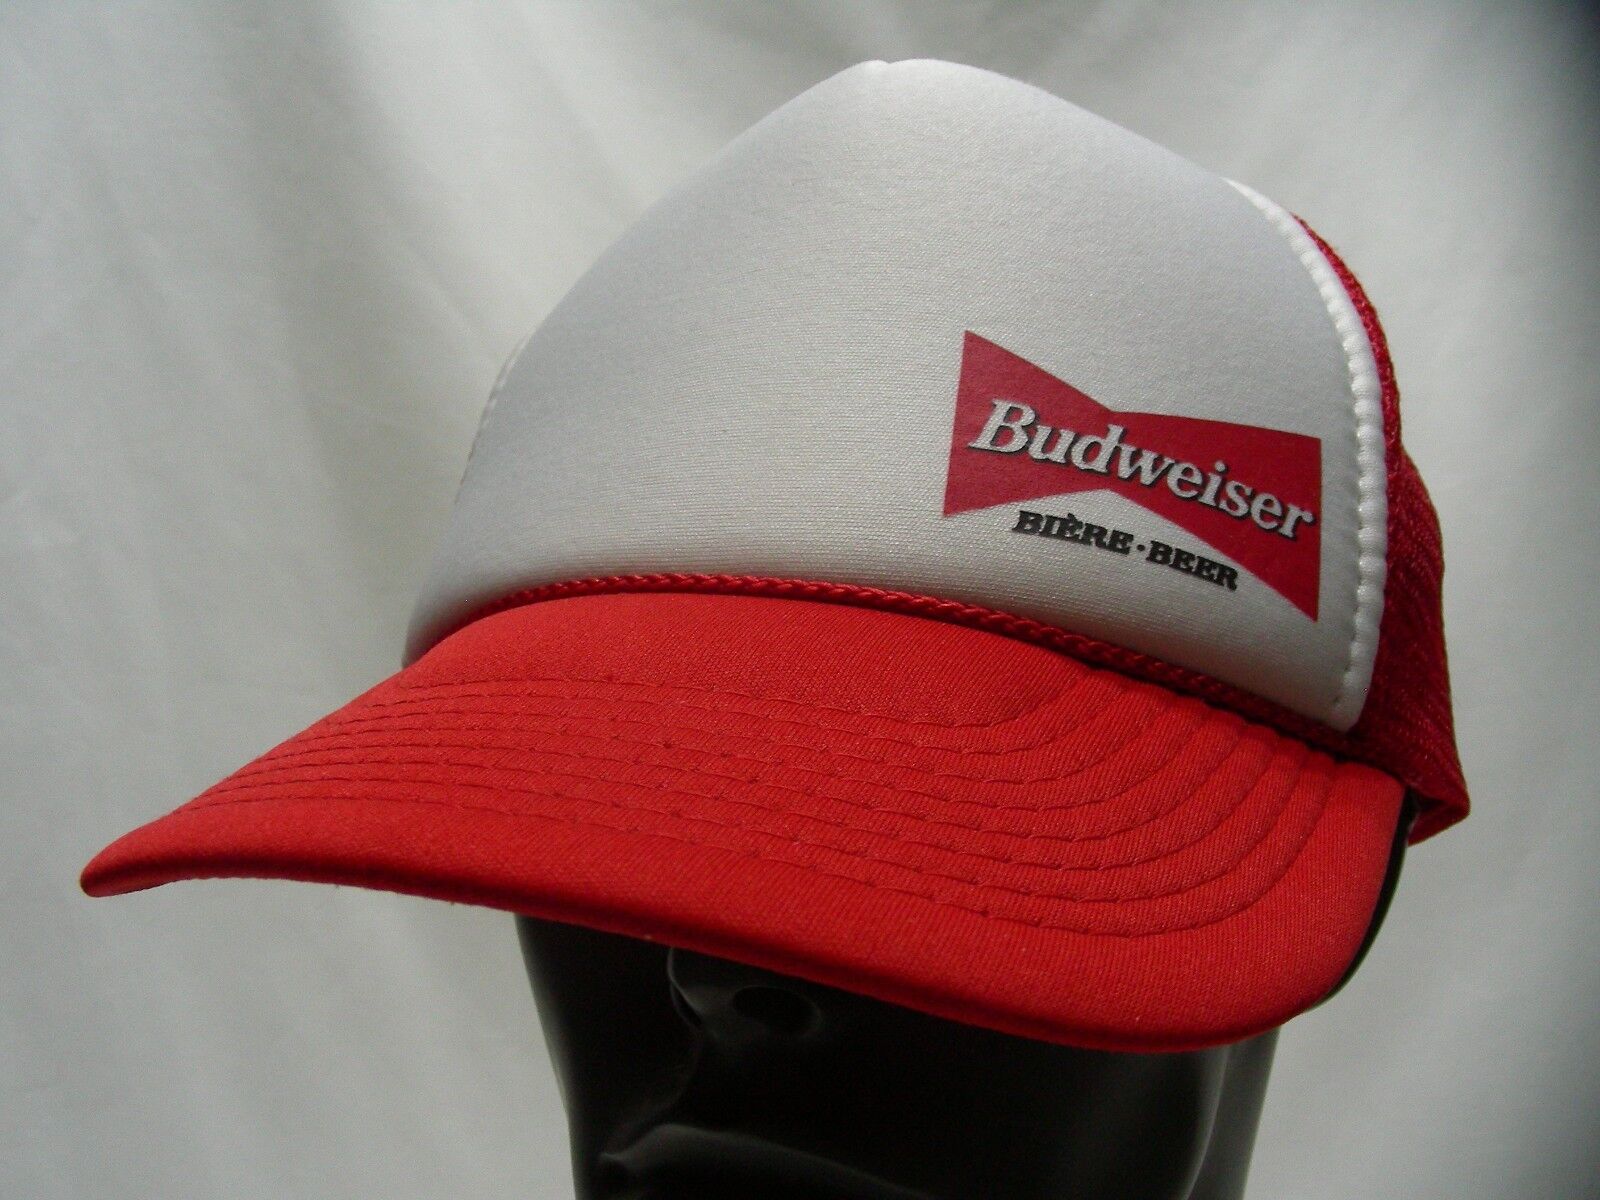 BUDWEISER - BIERE - BEER TRUCKER STYLE ADJUSTABLE SNAPBACK BALL CAP HAT